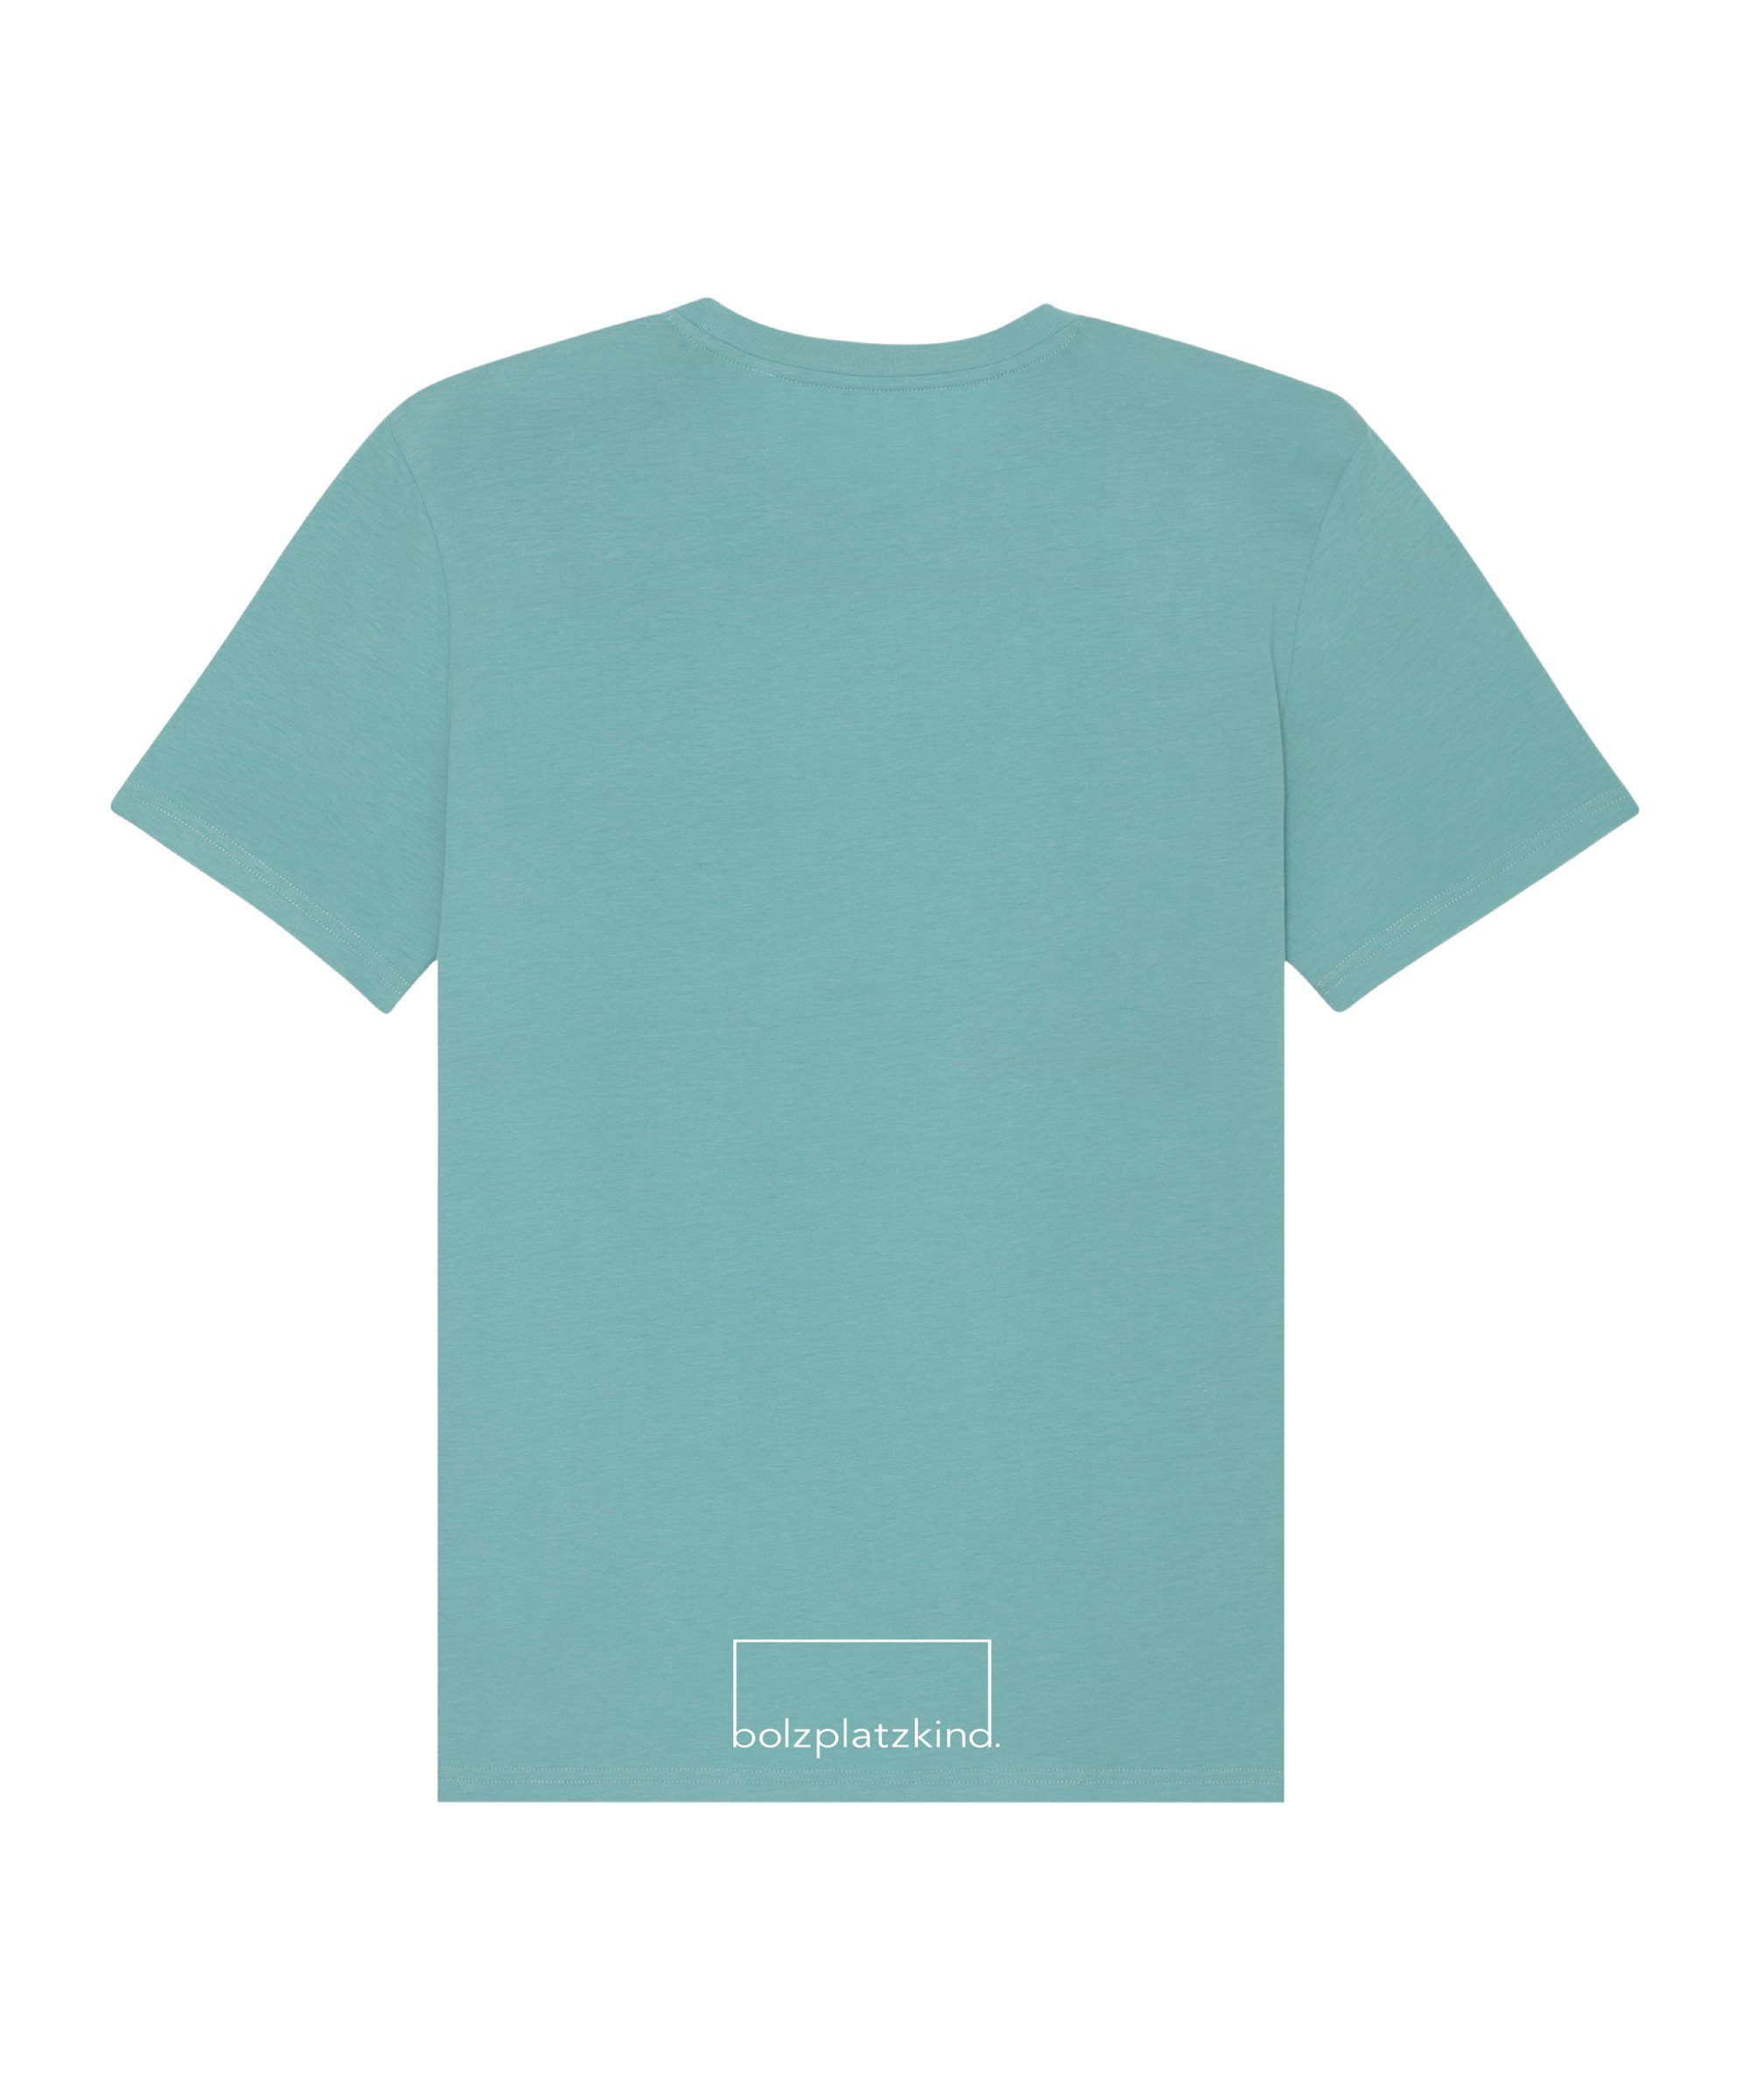 Nachhaltiges "Line-Up" T-Shirt Produkt Bolzplatzkind tuerkis T-Shirt